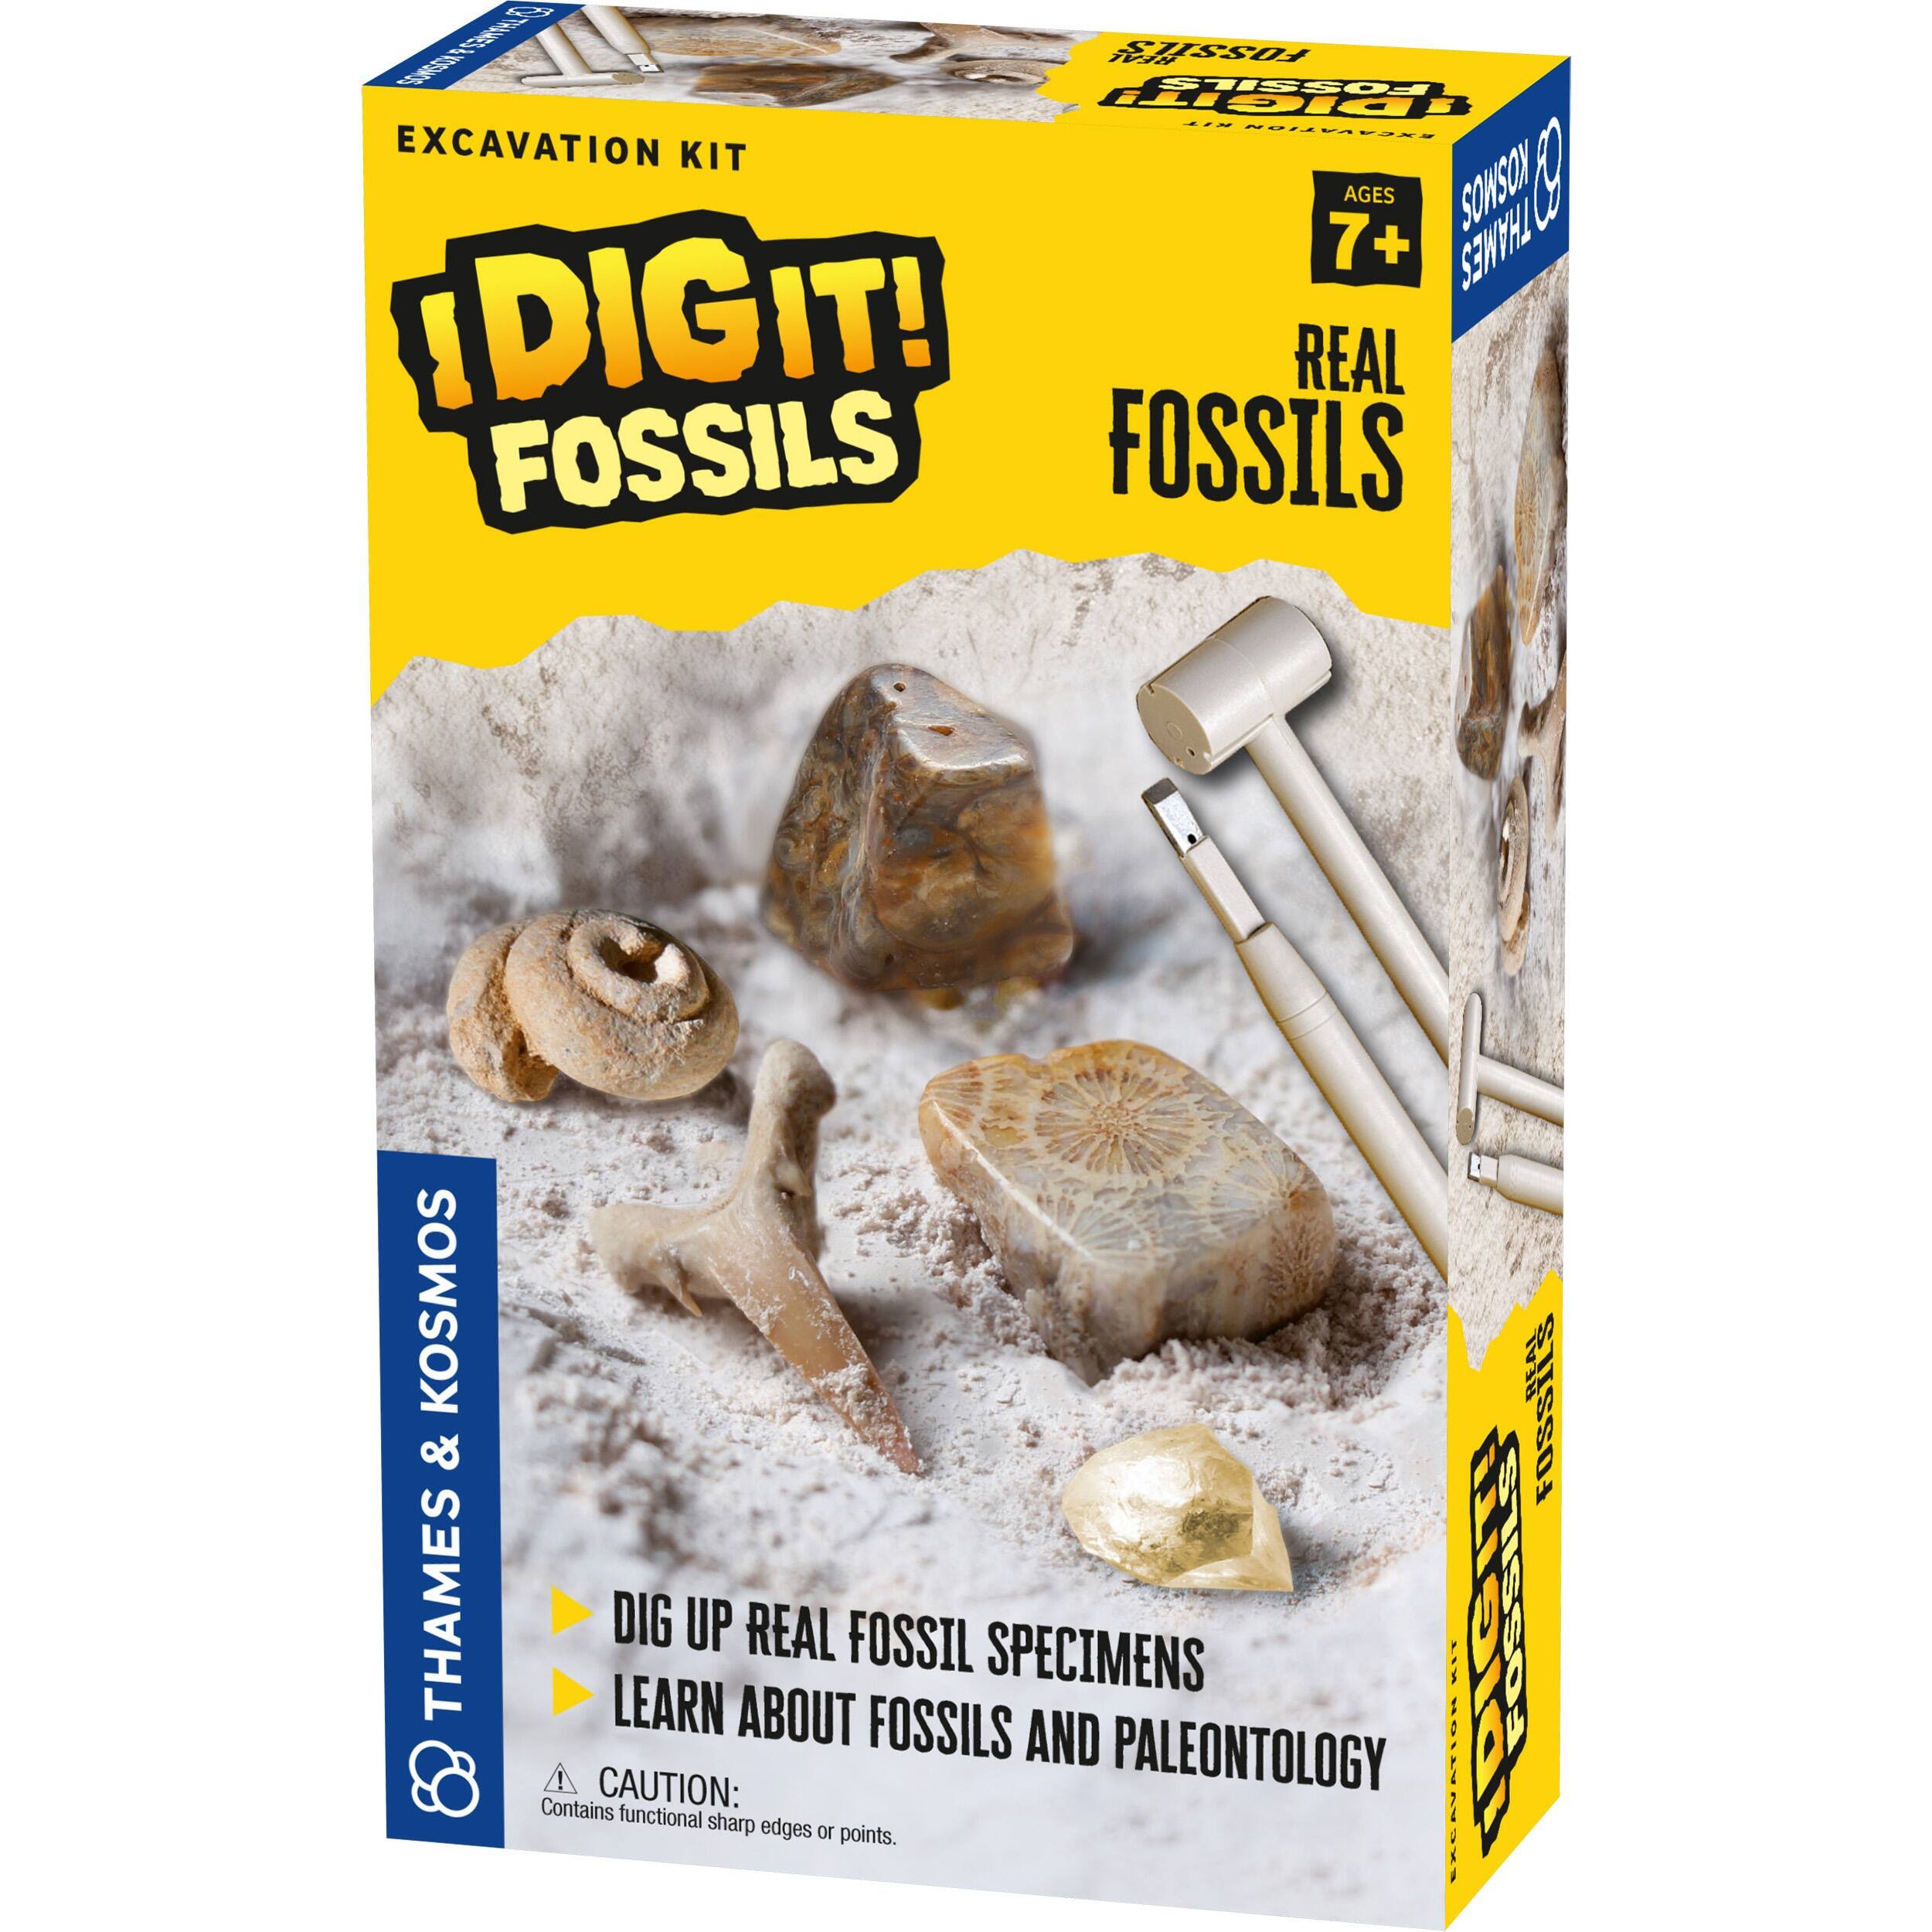 Thames & Kosmos - I Dig It! Fossils - Real Fossils Excavation Kit